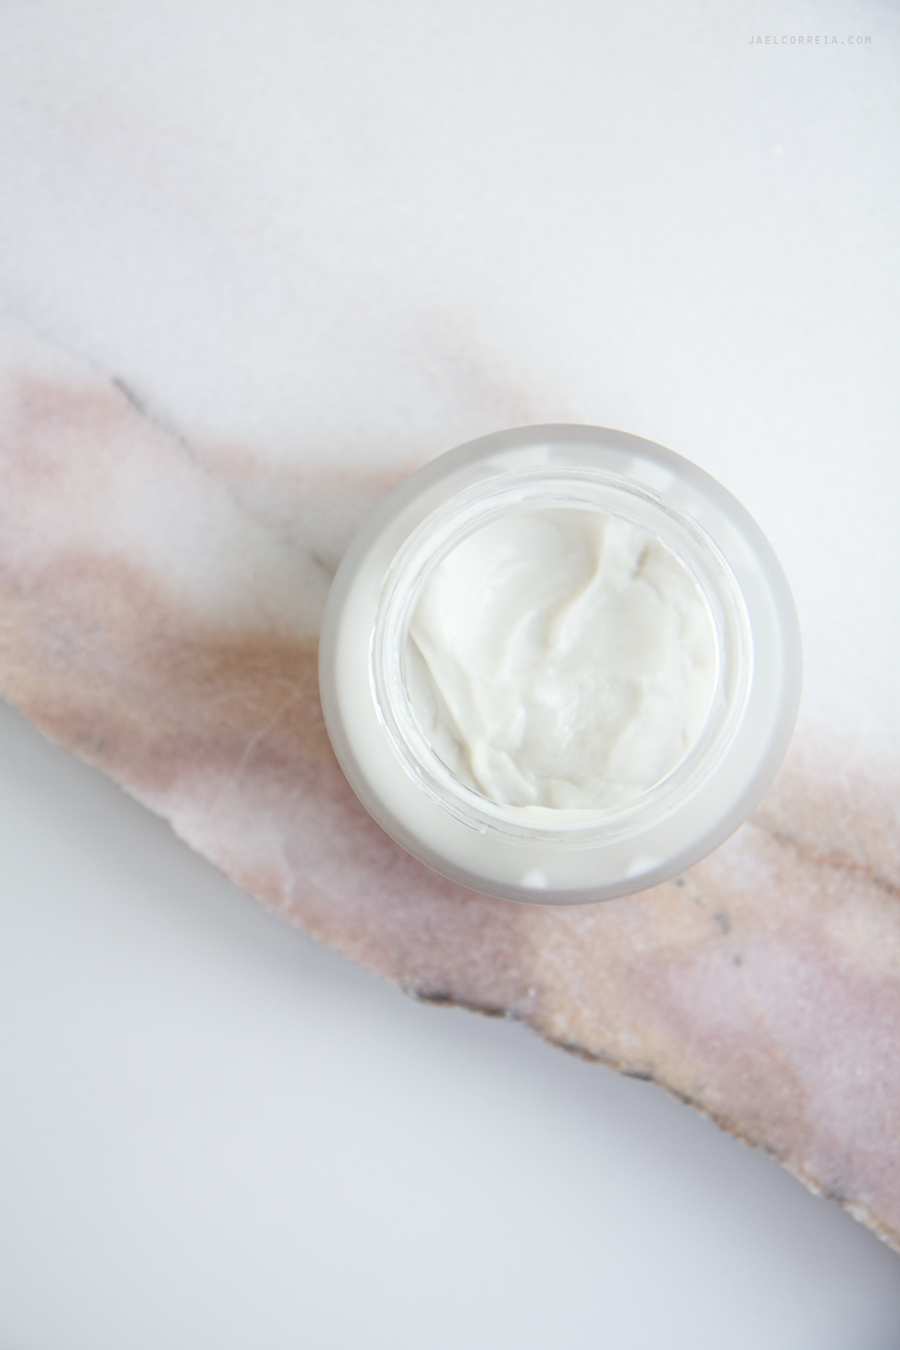 sesderma azelac cream creme hidratante  portugal review jael correia barato acne manchas rosacea online shop notino pt